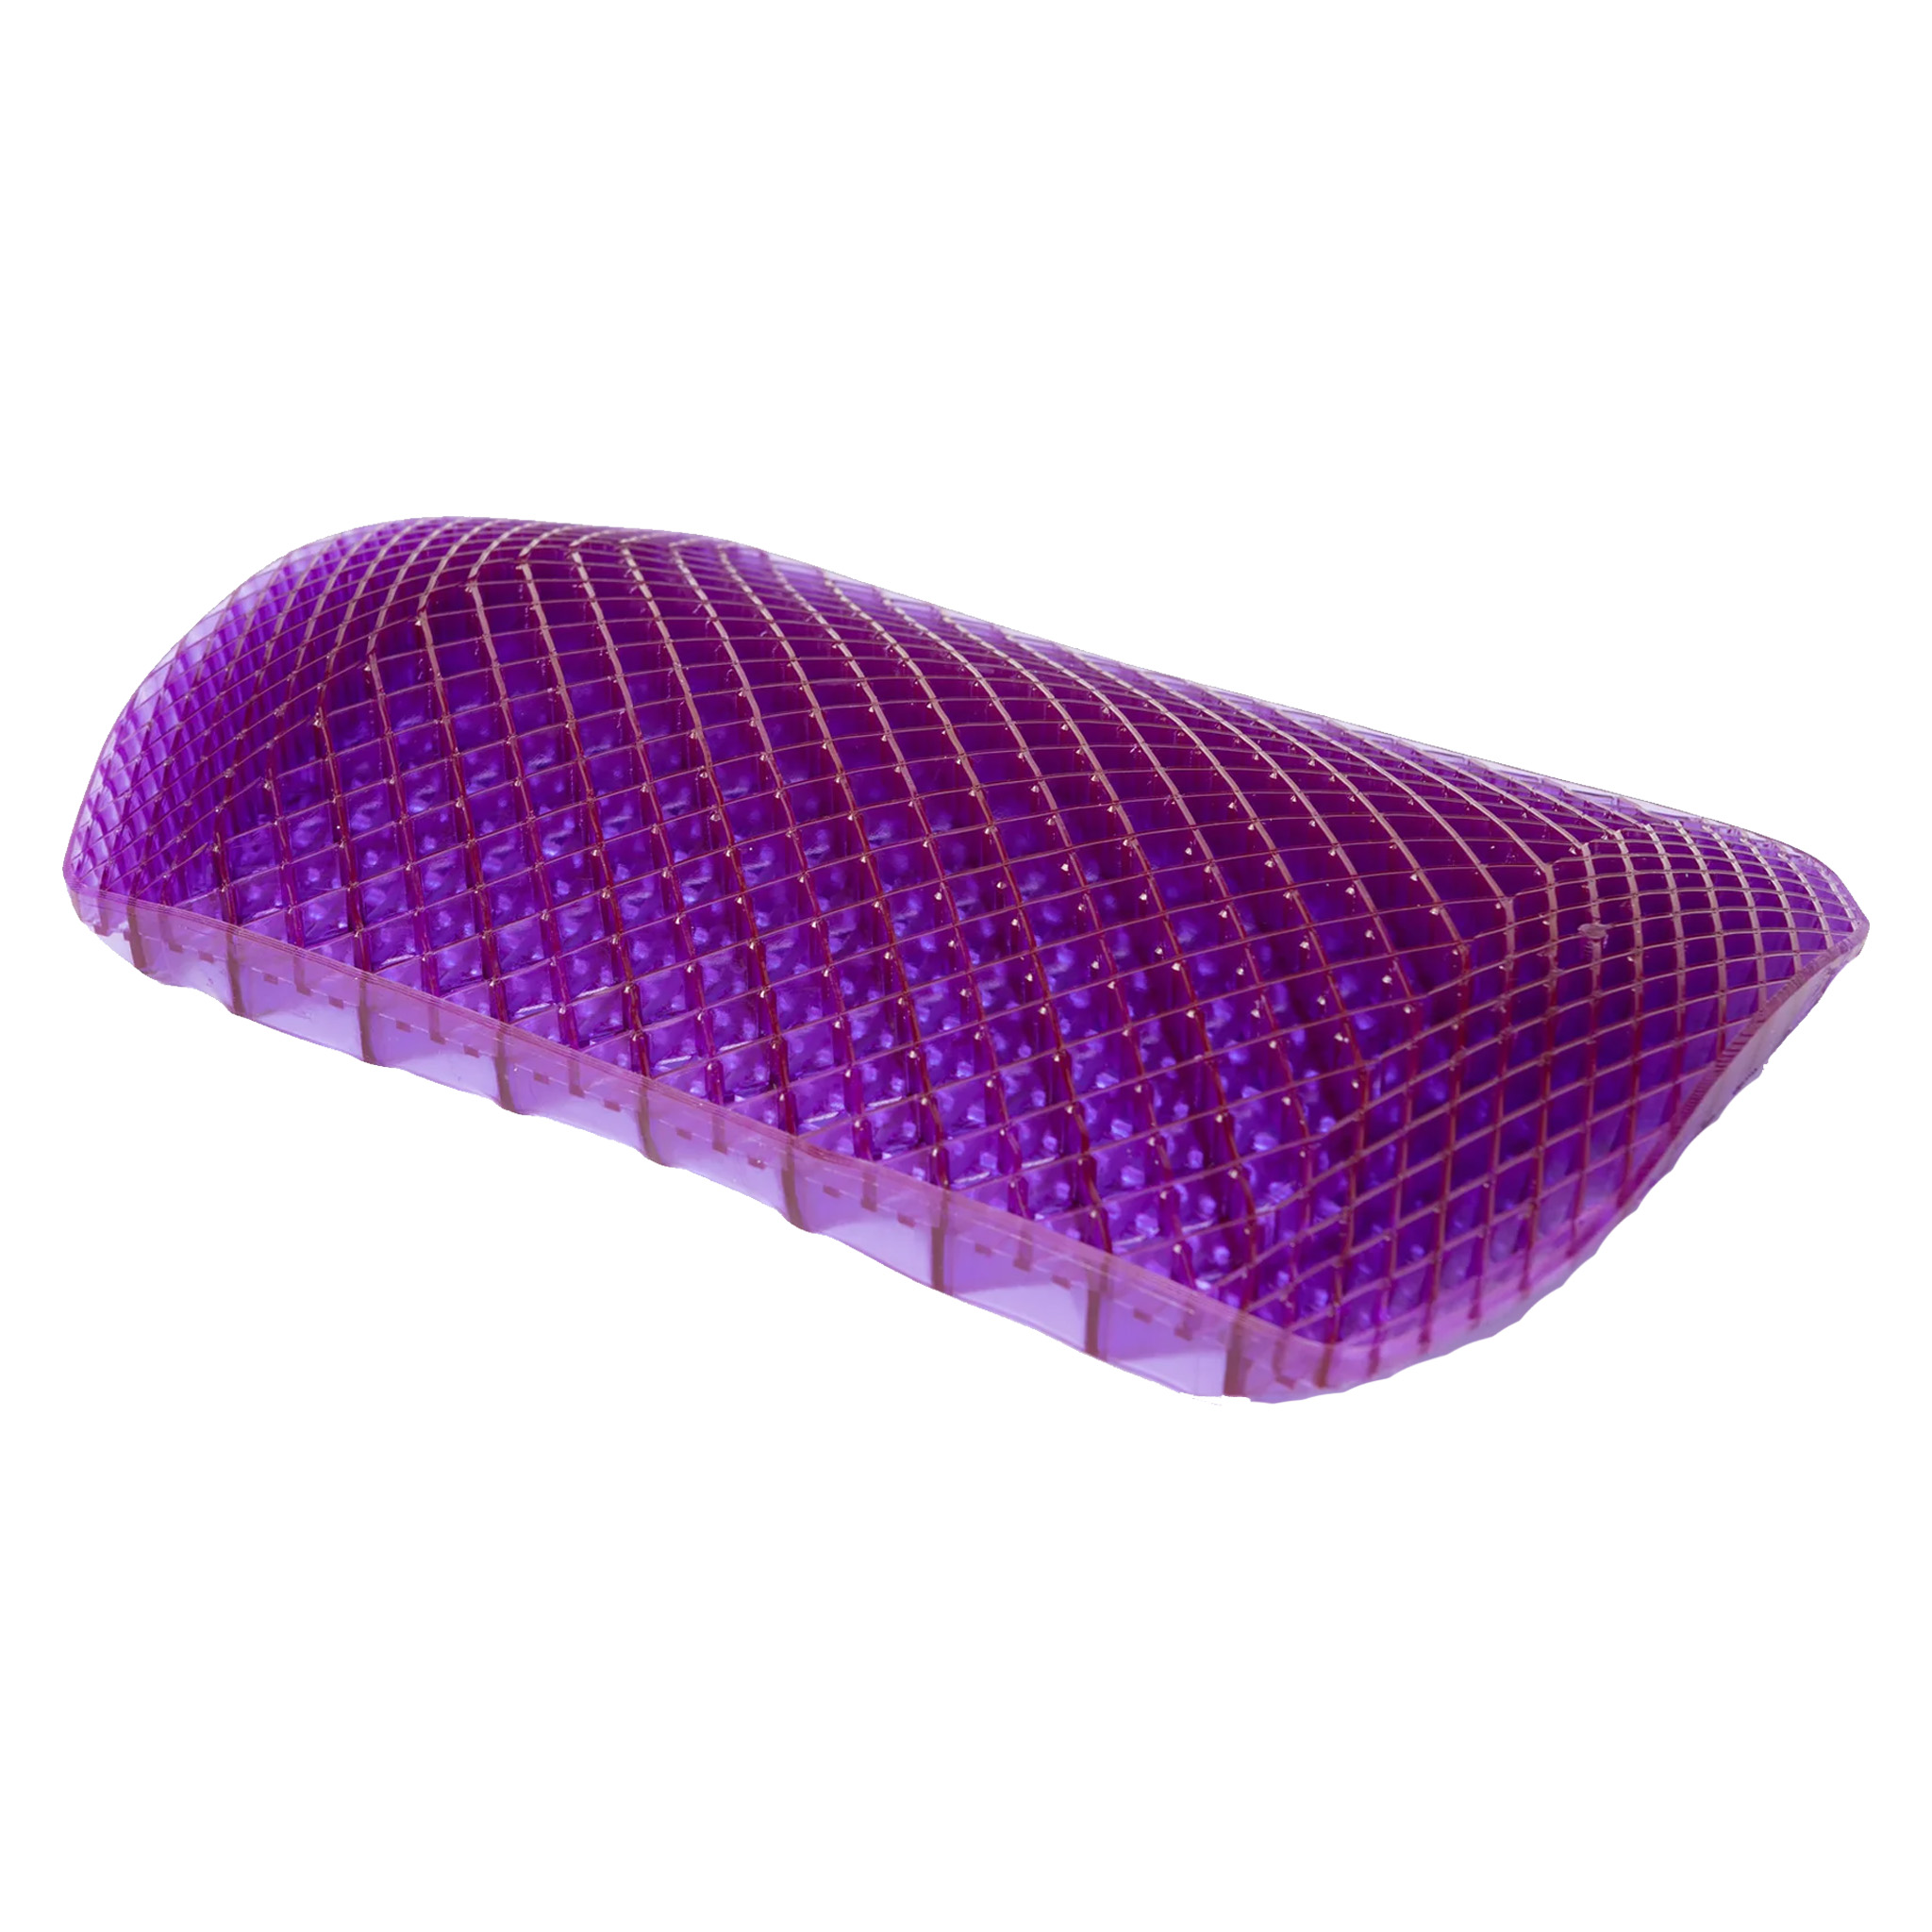 The Purple Back No-Pressure Seat Cushion